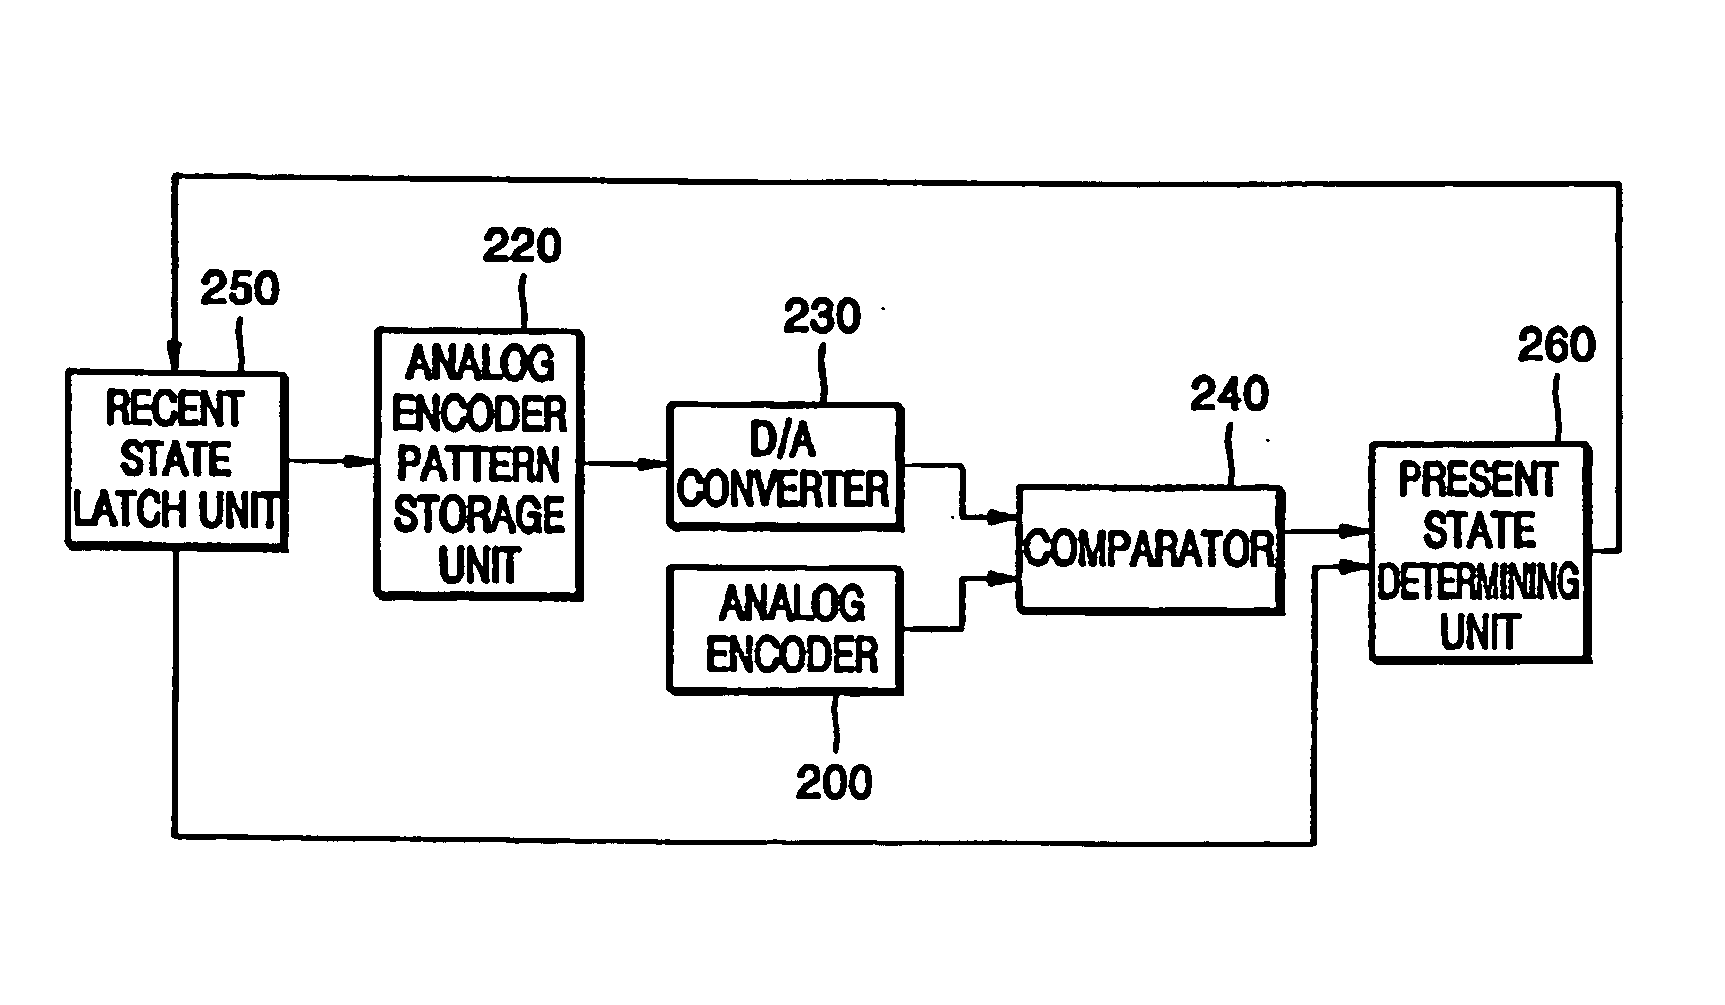 Method and apparatus to process an analog encoder signal